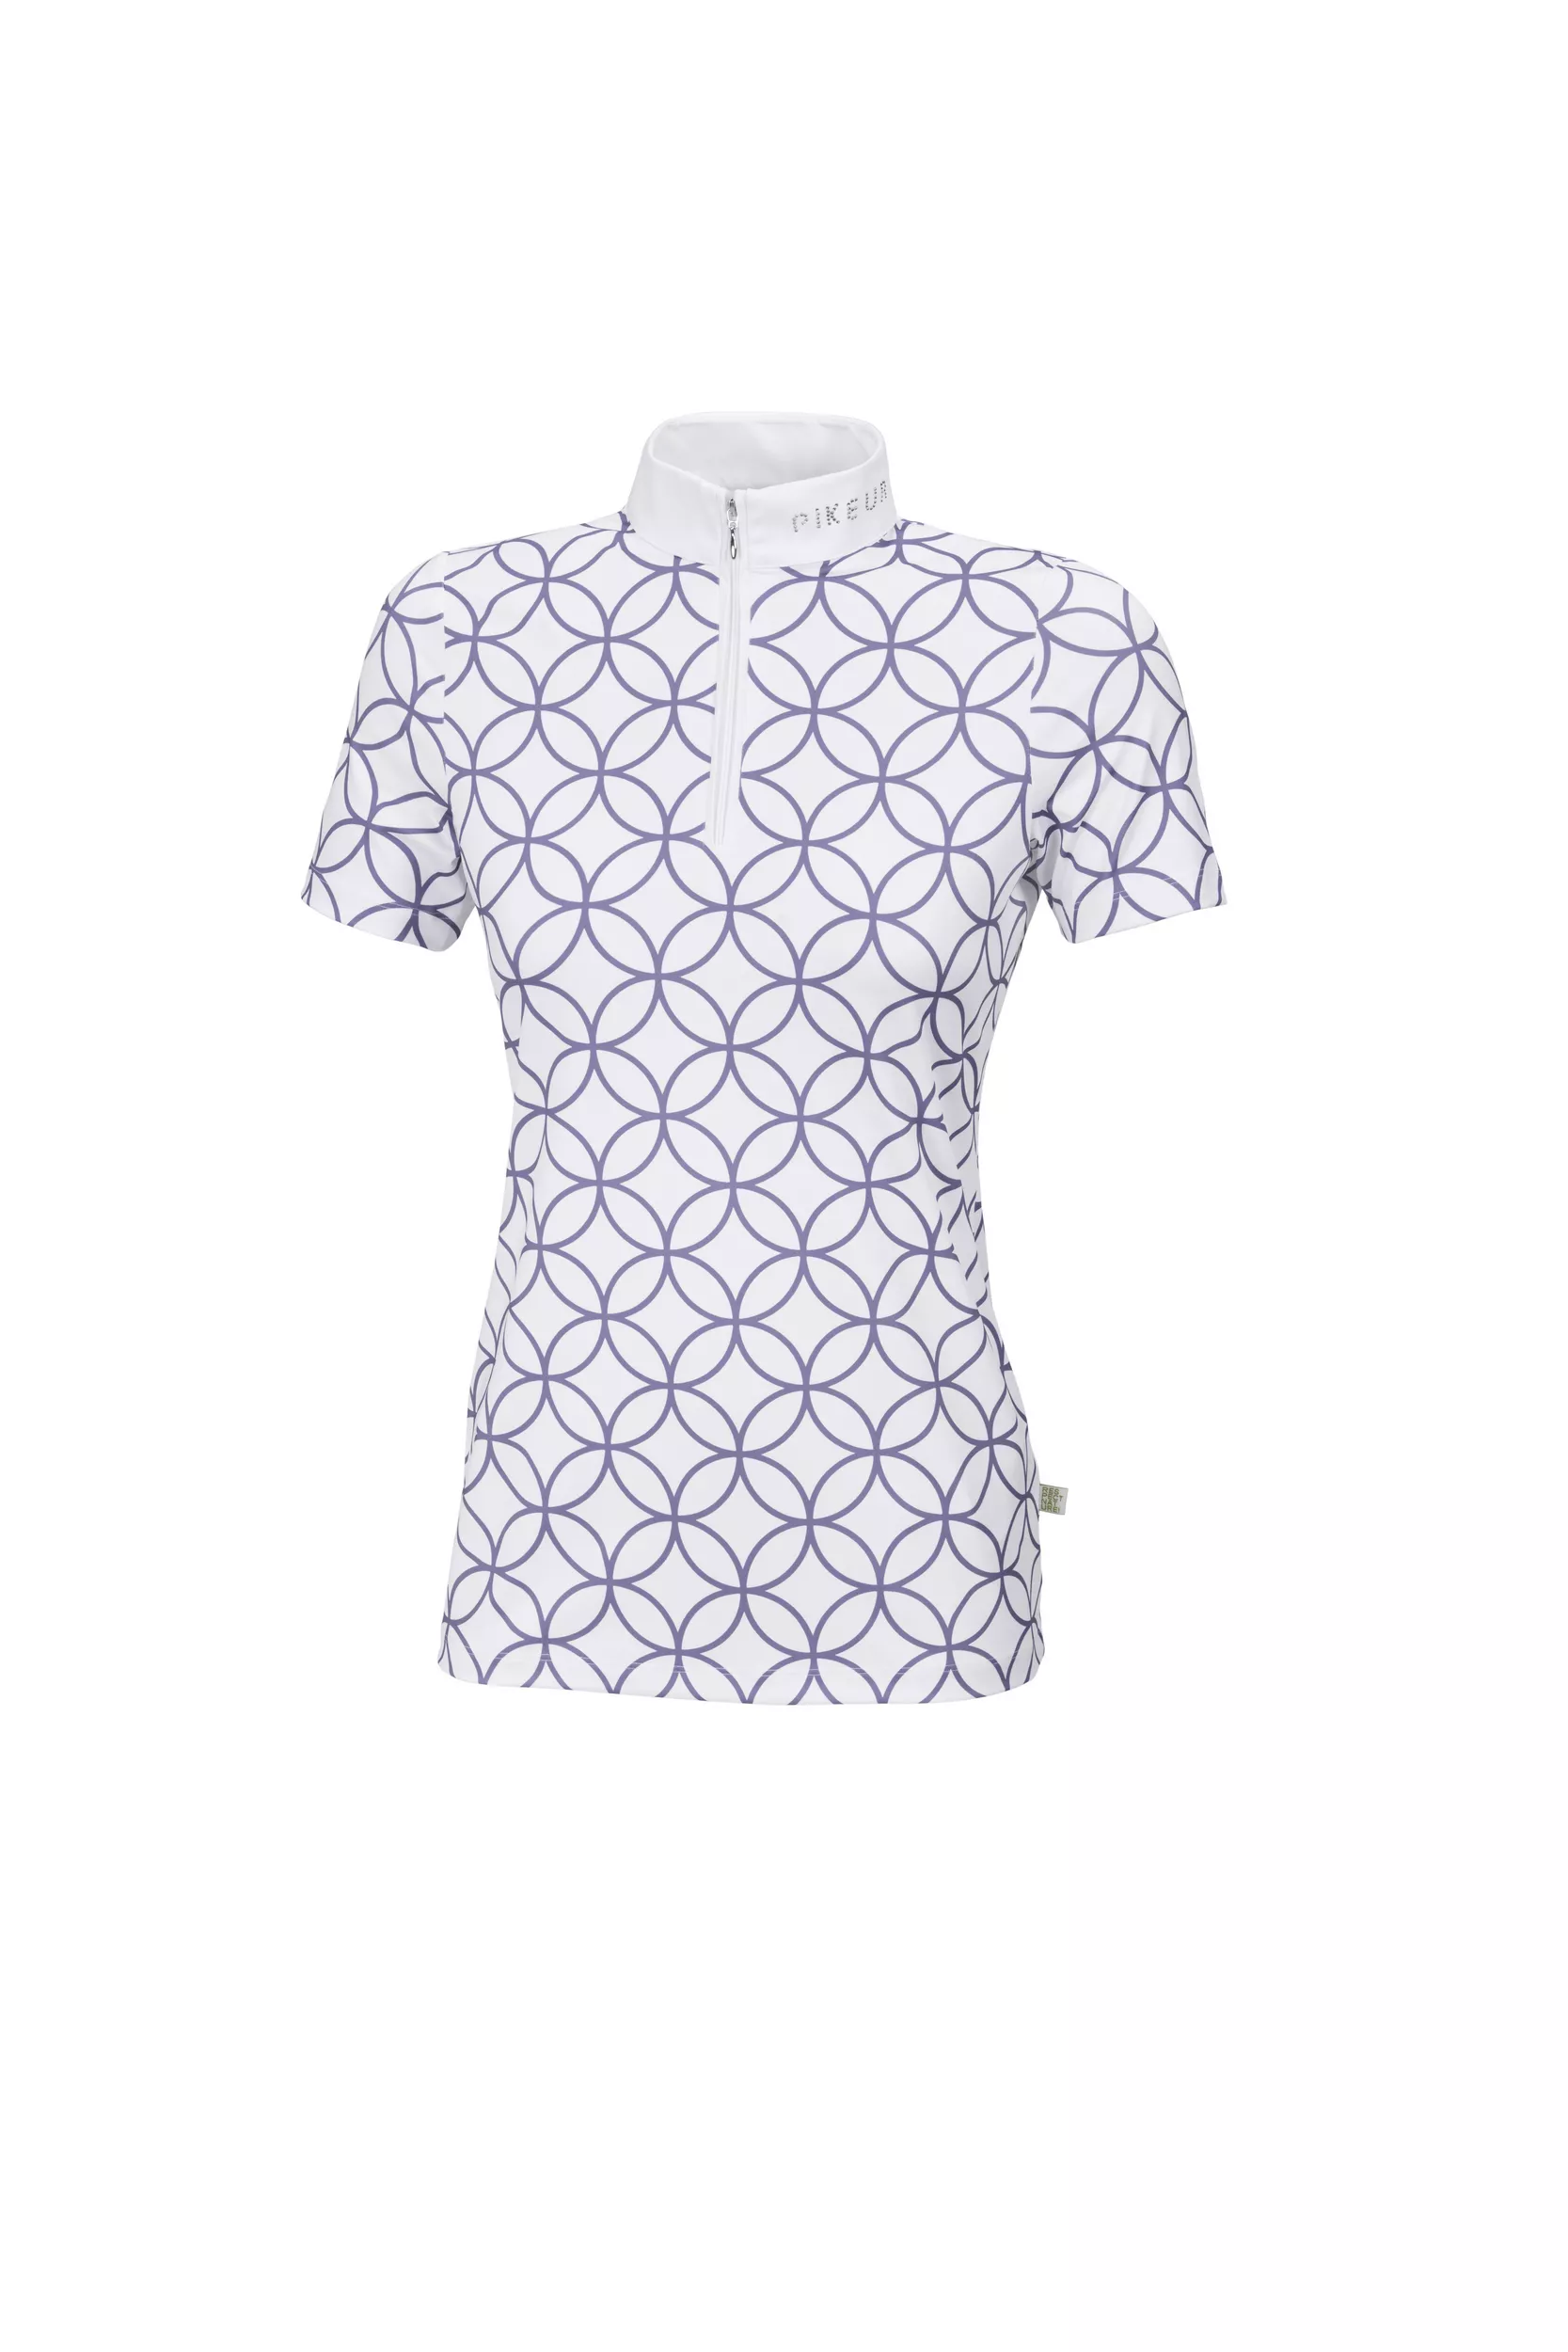 Camicia da torneo da donna Marou, Sportswear 22, bianco/viola argento